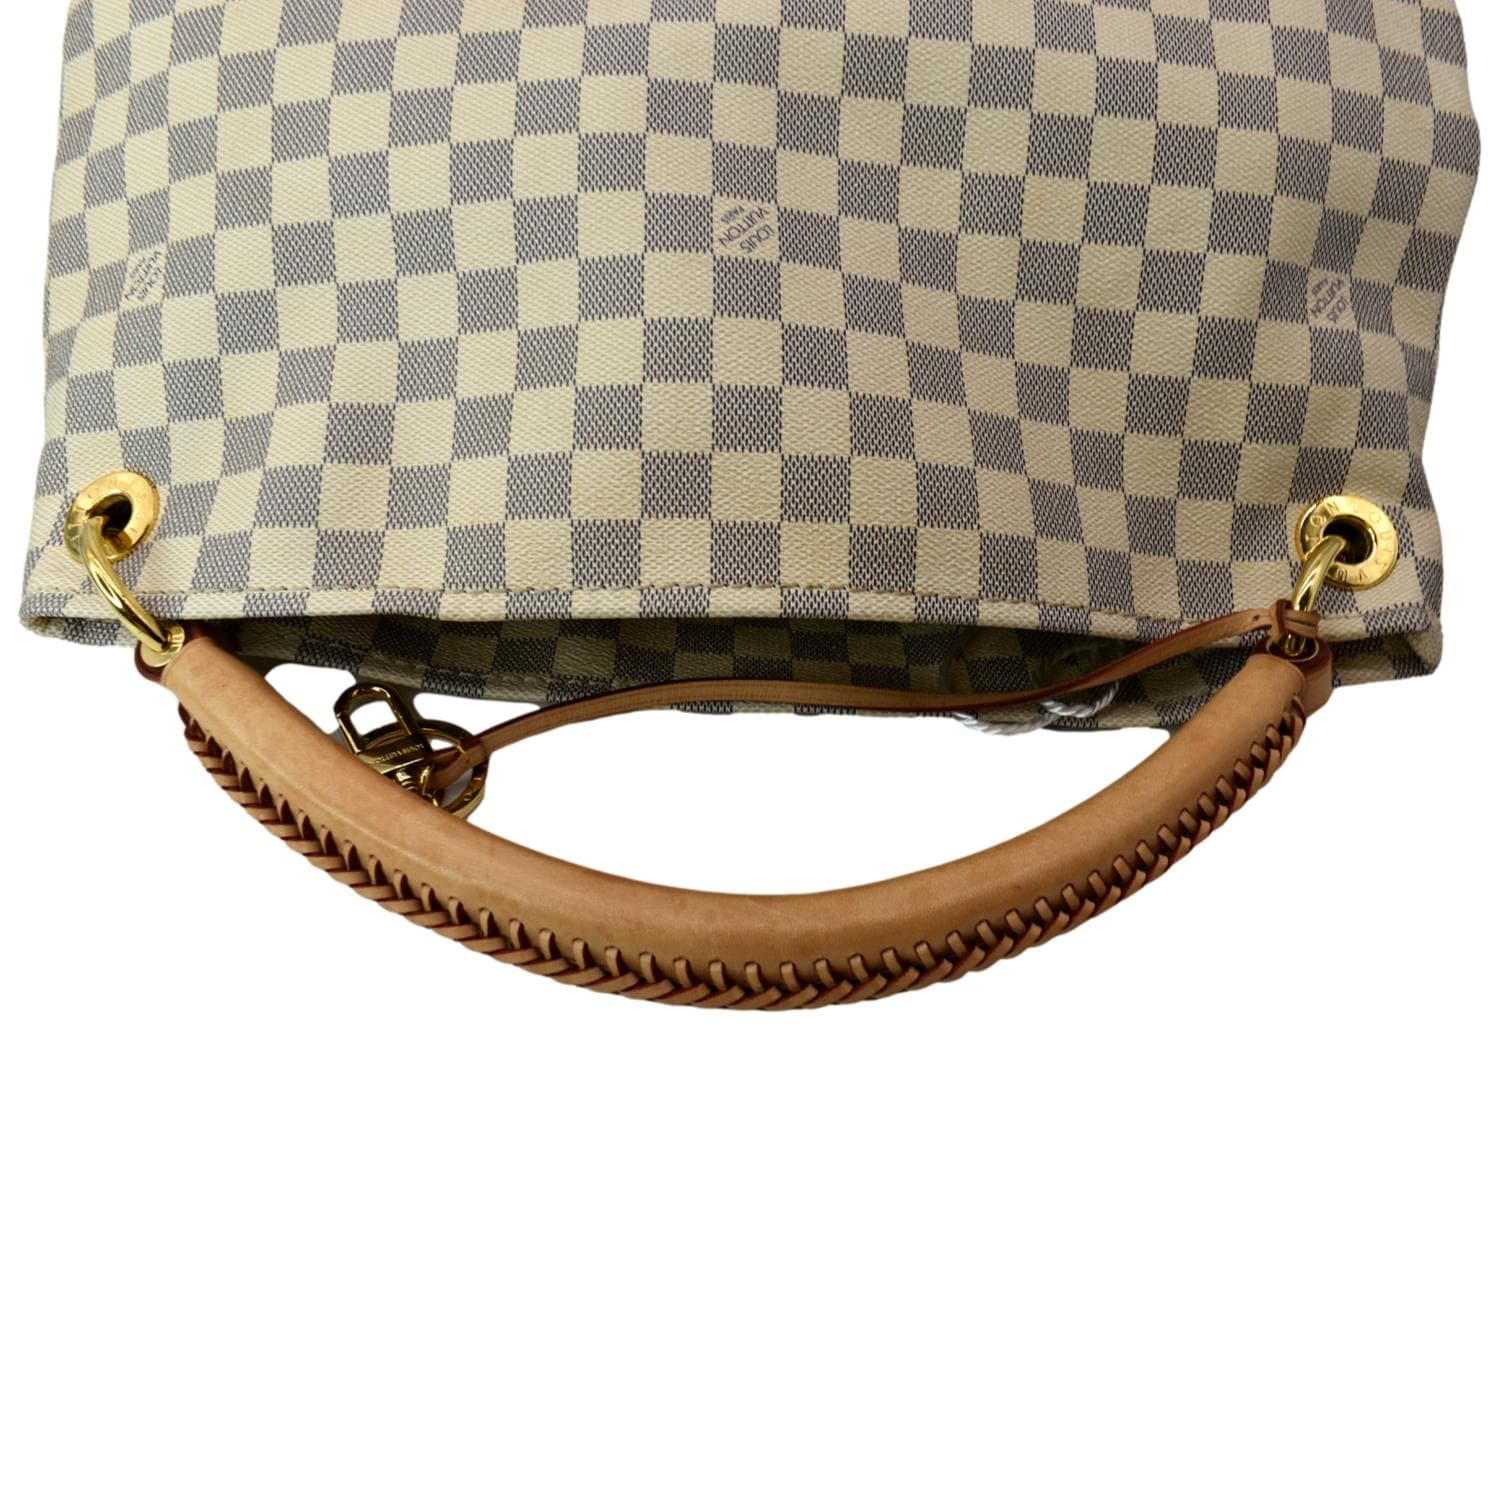 Authentic Louis Vuitton Artsy Damier Azur Hobo Shopper Handbag Bag